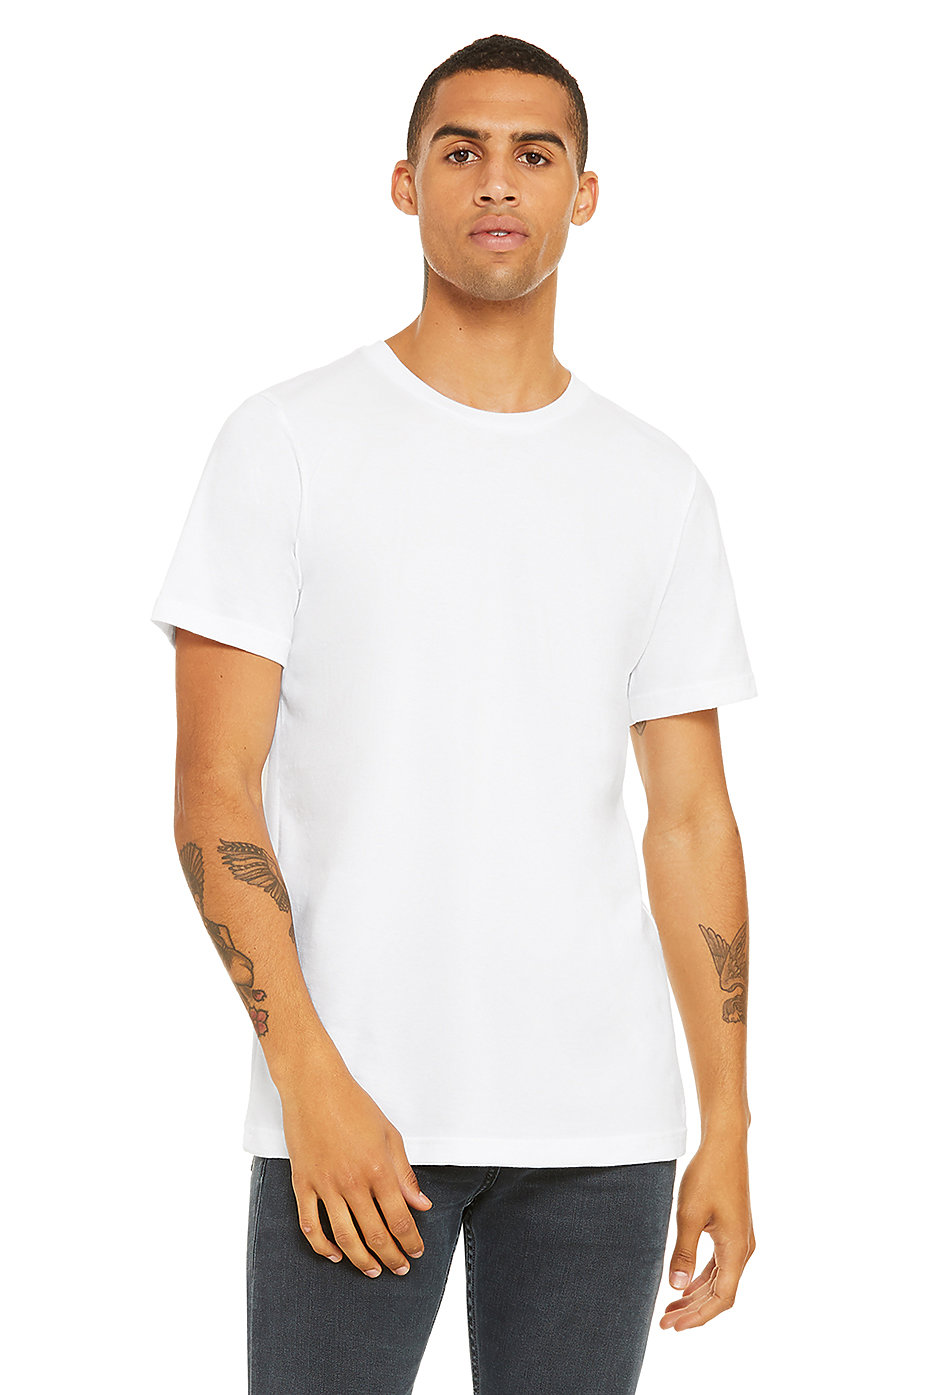 discount 89% White M NoName T-shirt MEN FASHION Shirts & T-shirts Custom fit 